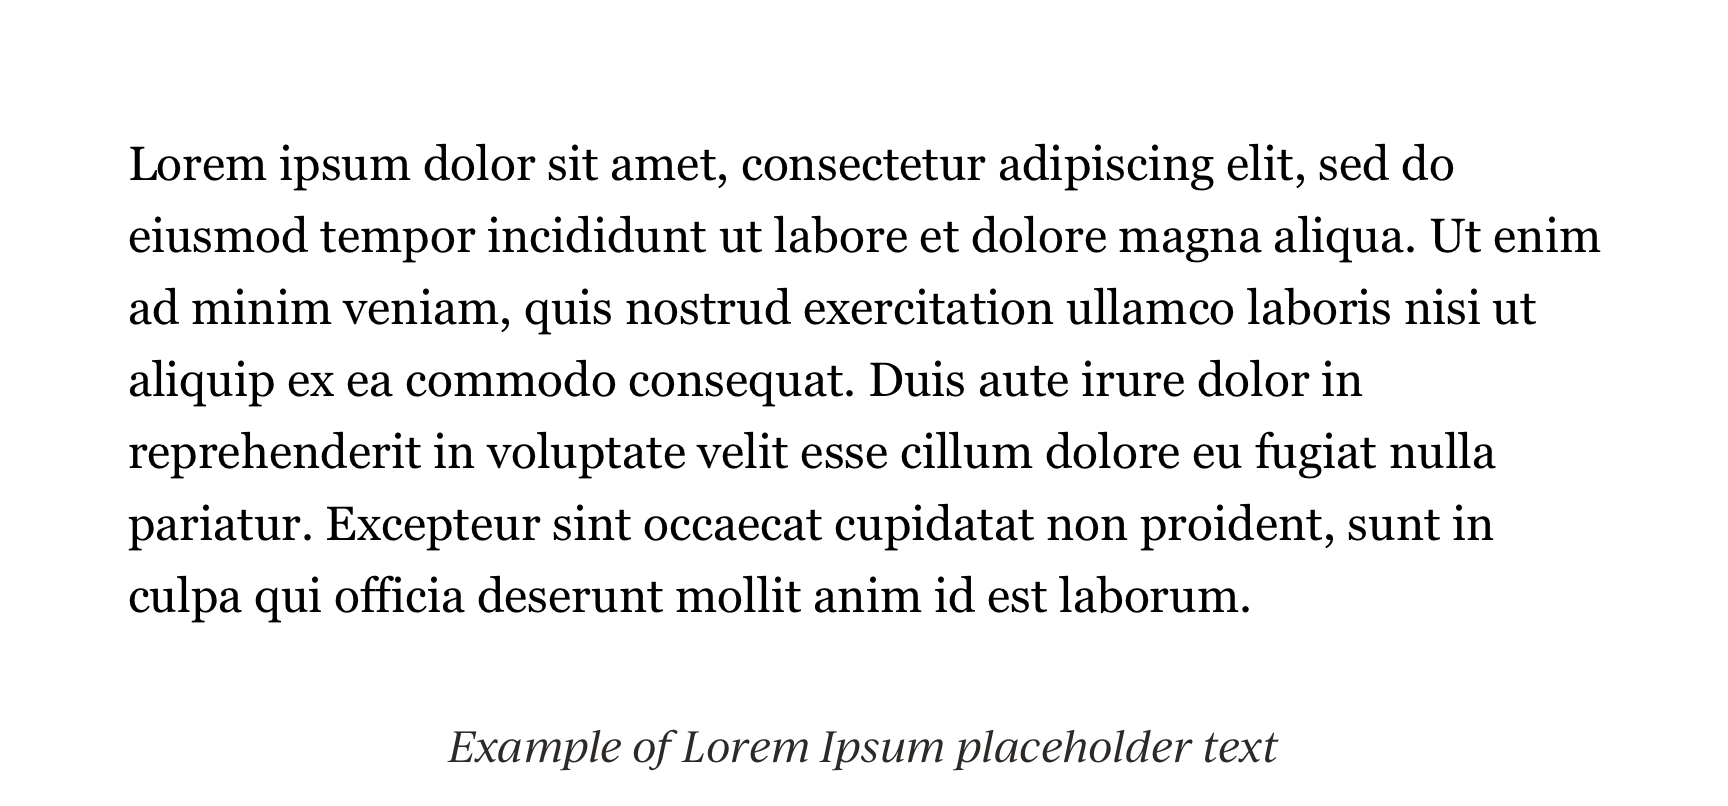 Example of Lorem Ipsum placeholder text